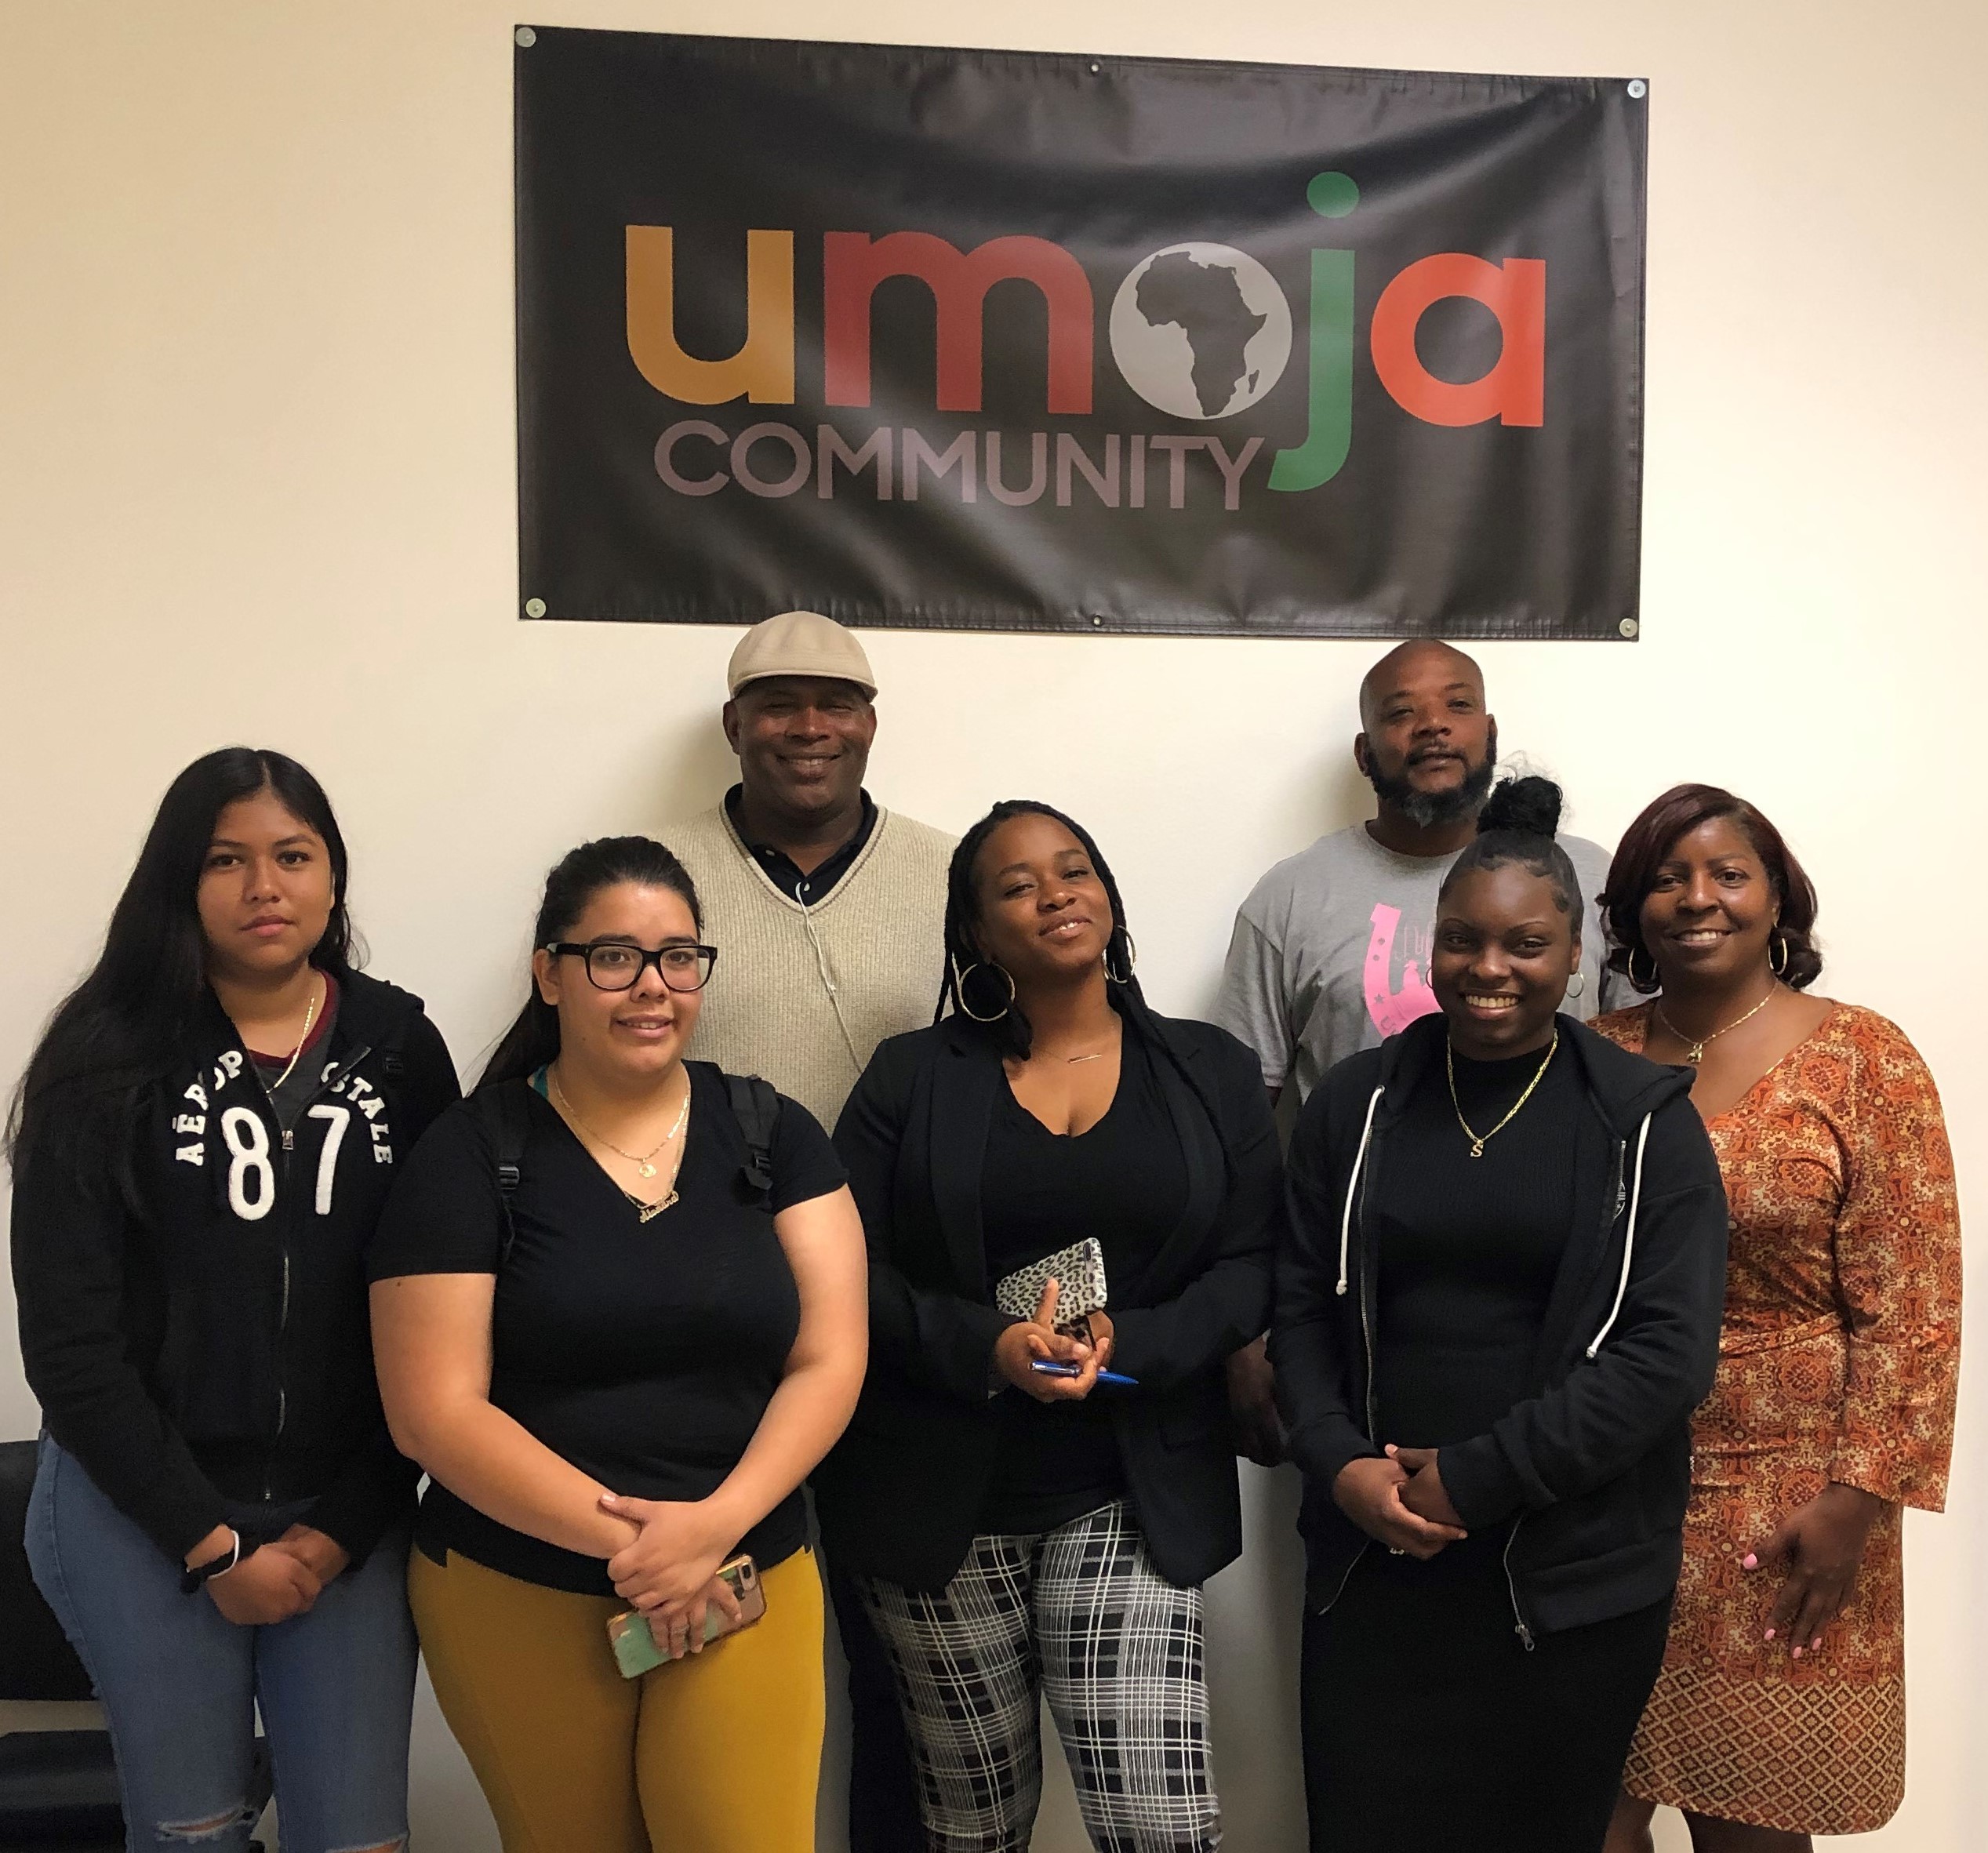 UMOJA Community Student Groups